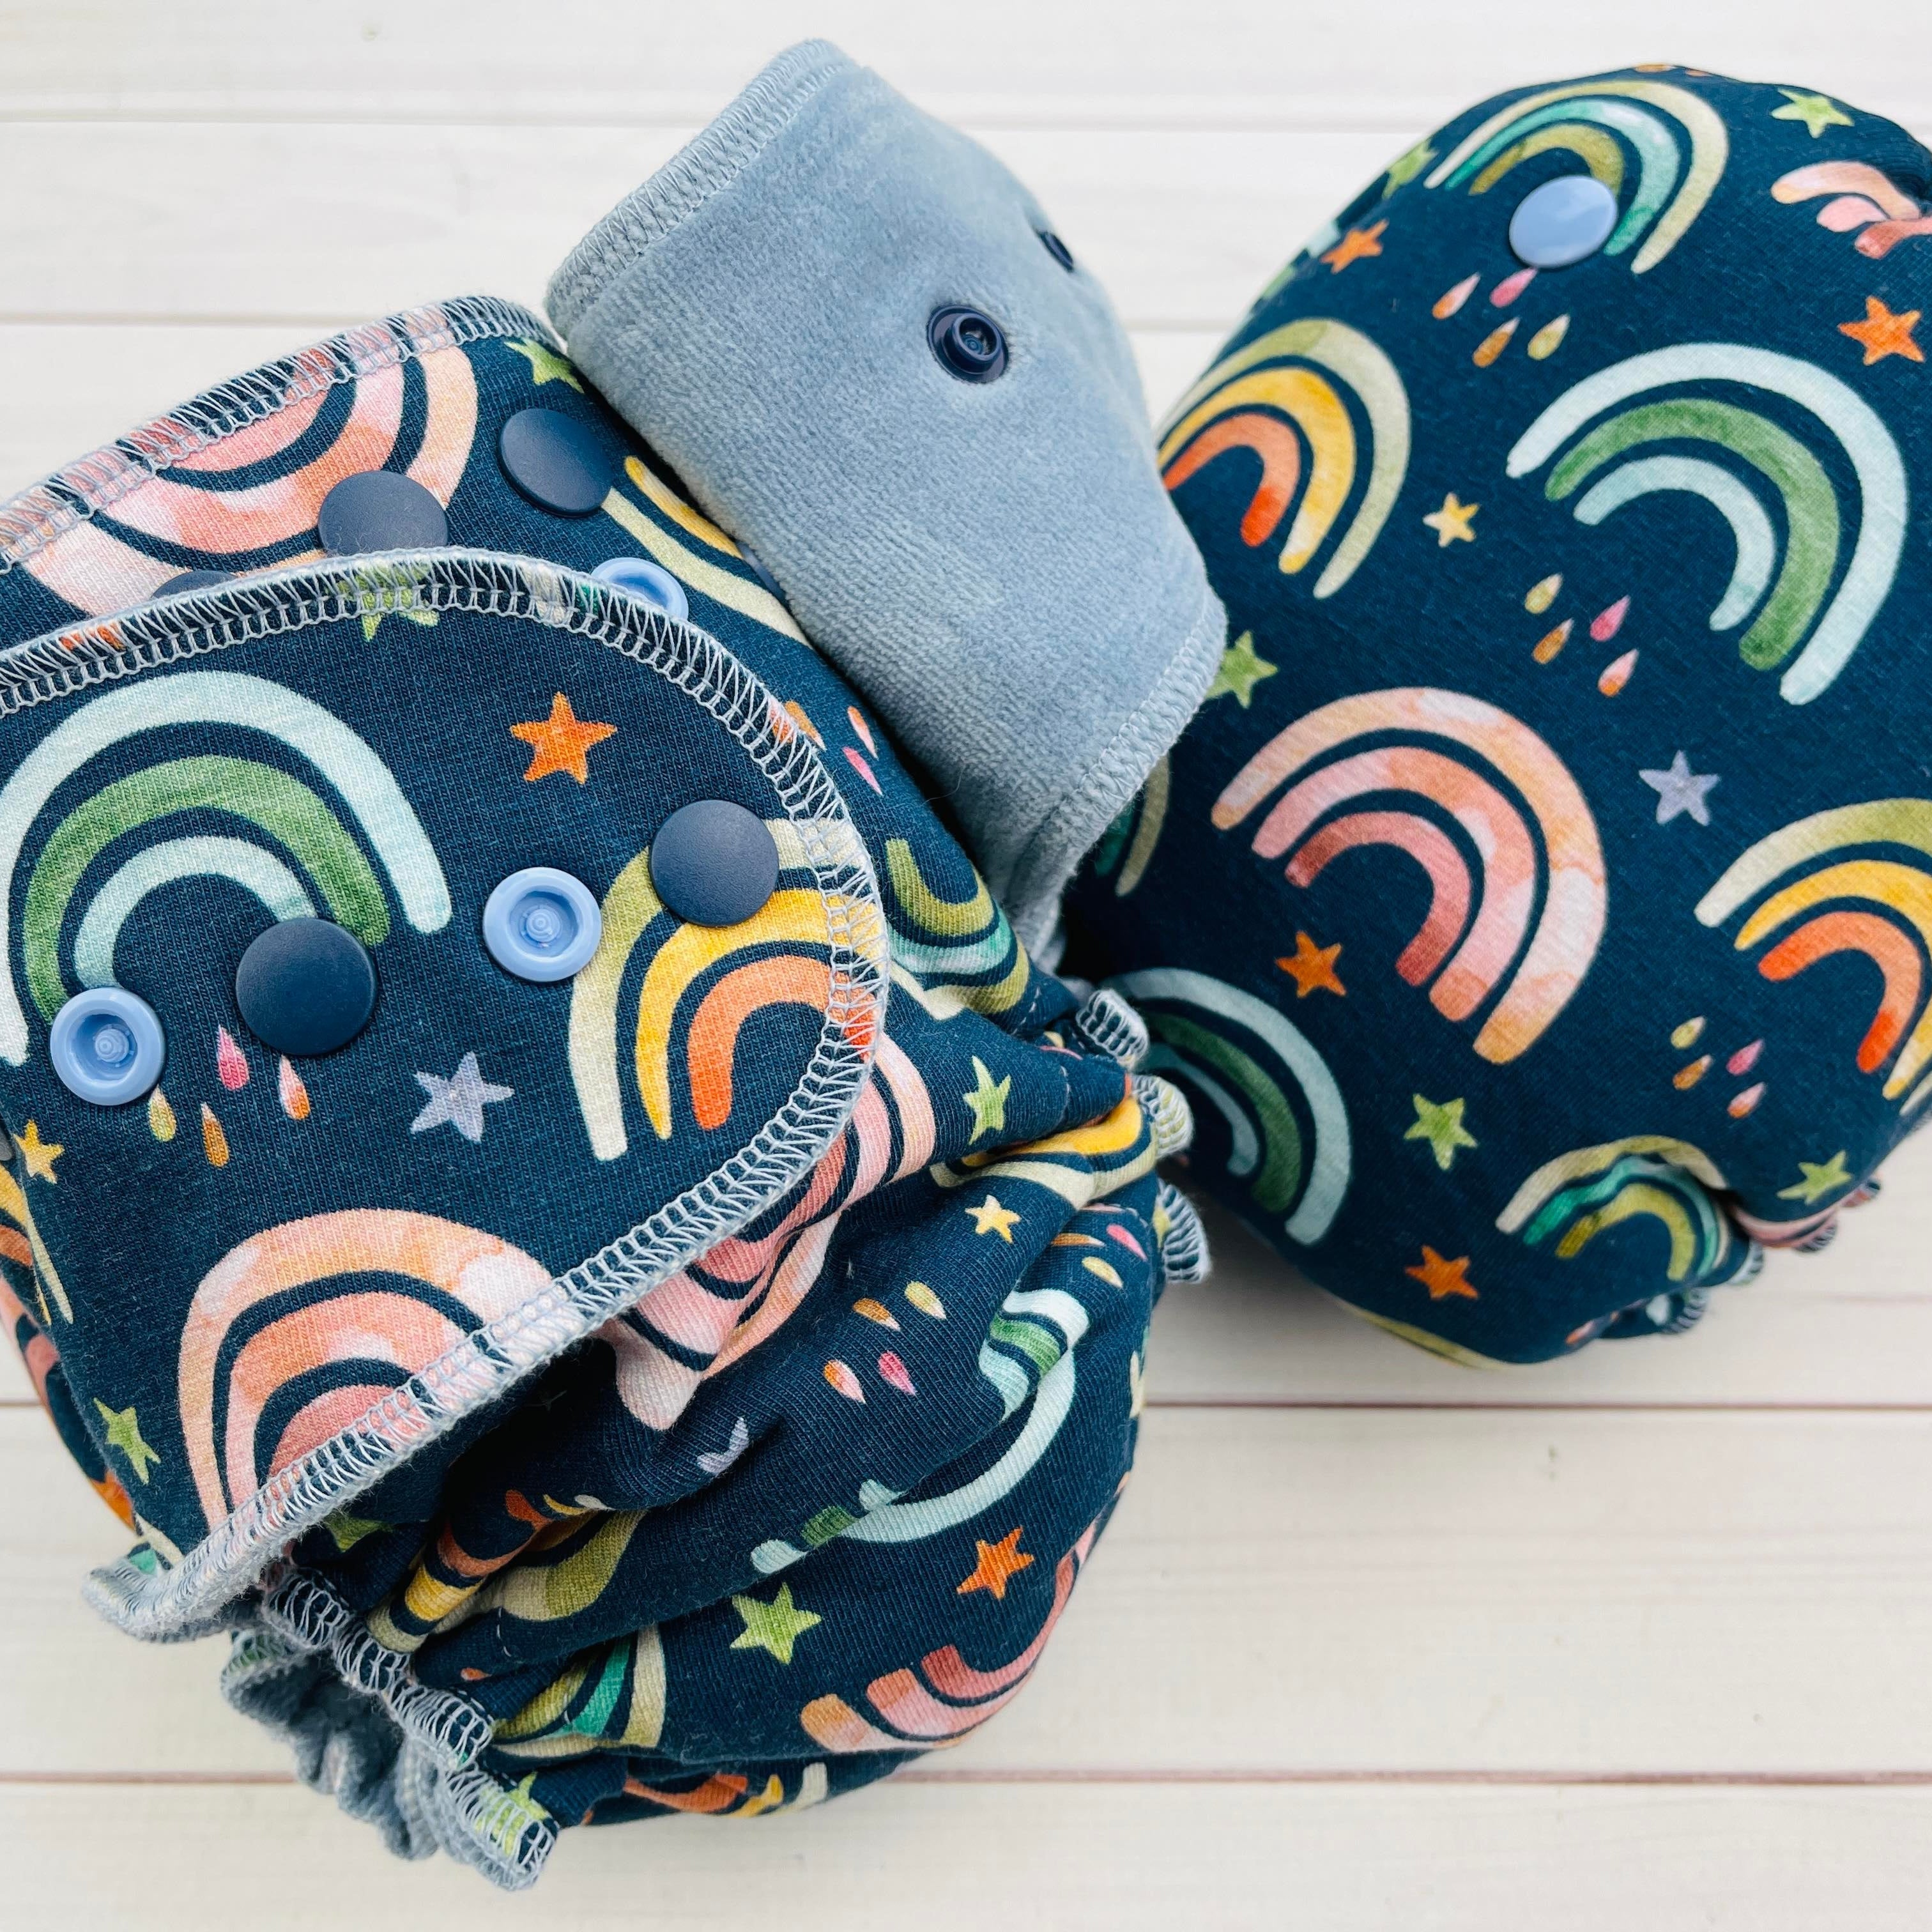 Lilly & Frank cloth diaper Stars & Rainbows Toddler Cloth Diaper - Hybrid -Serged